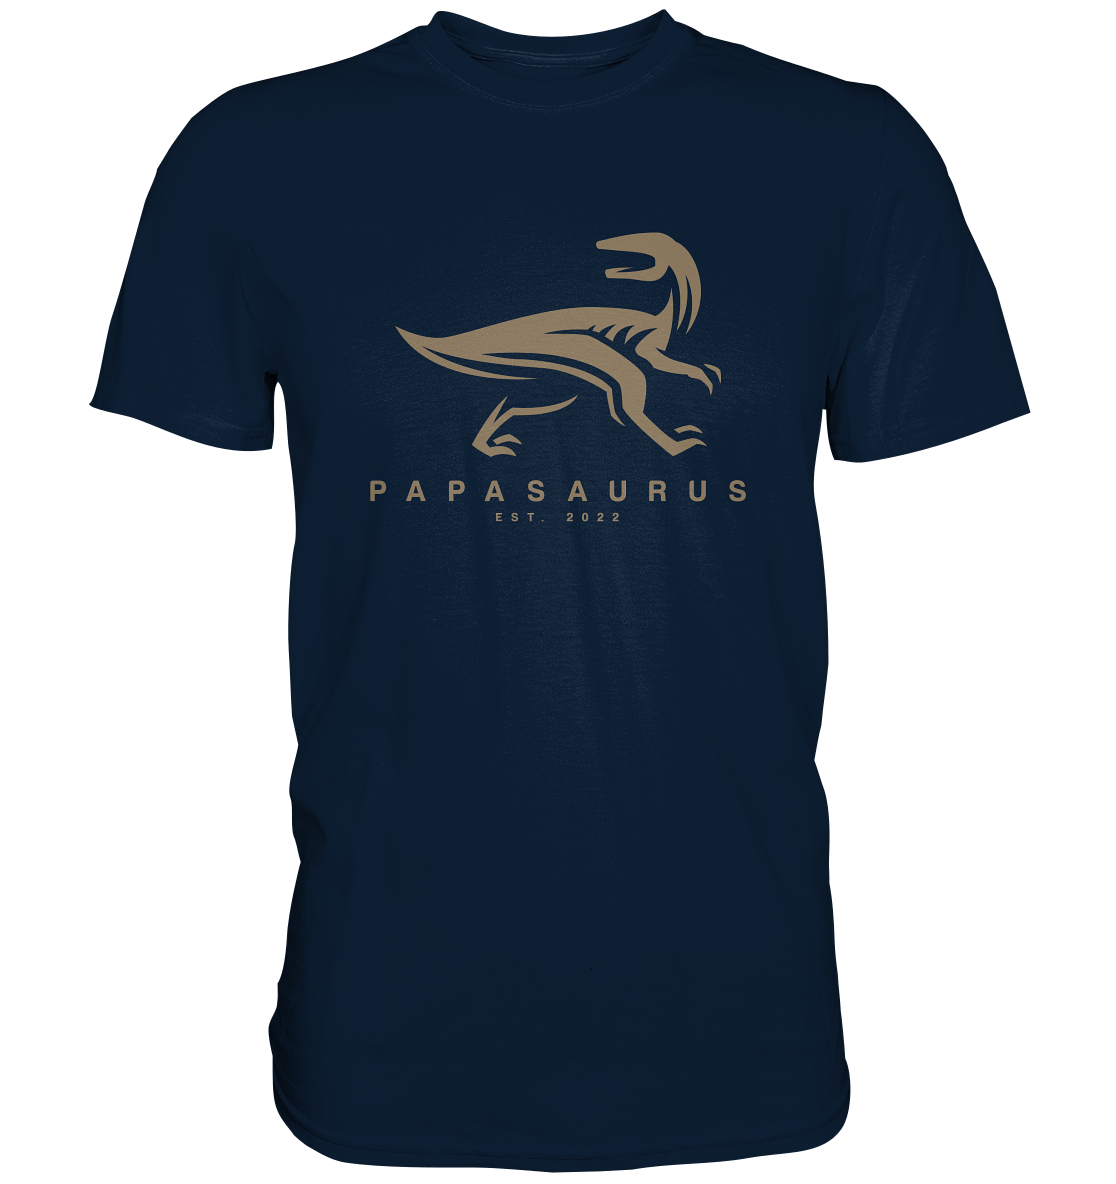 Papasaurus V2 - Datum personalisierbar - Premium Shirt